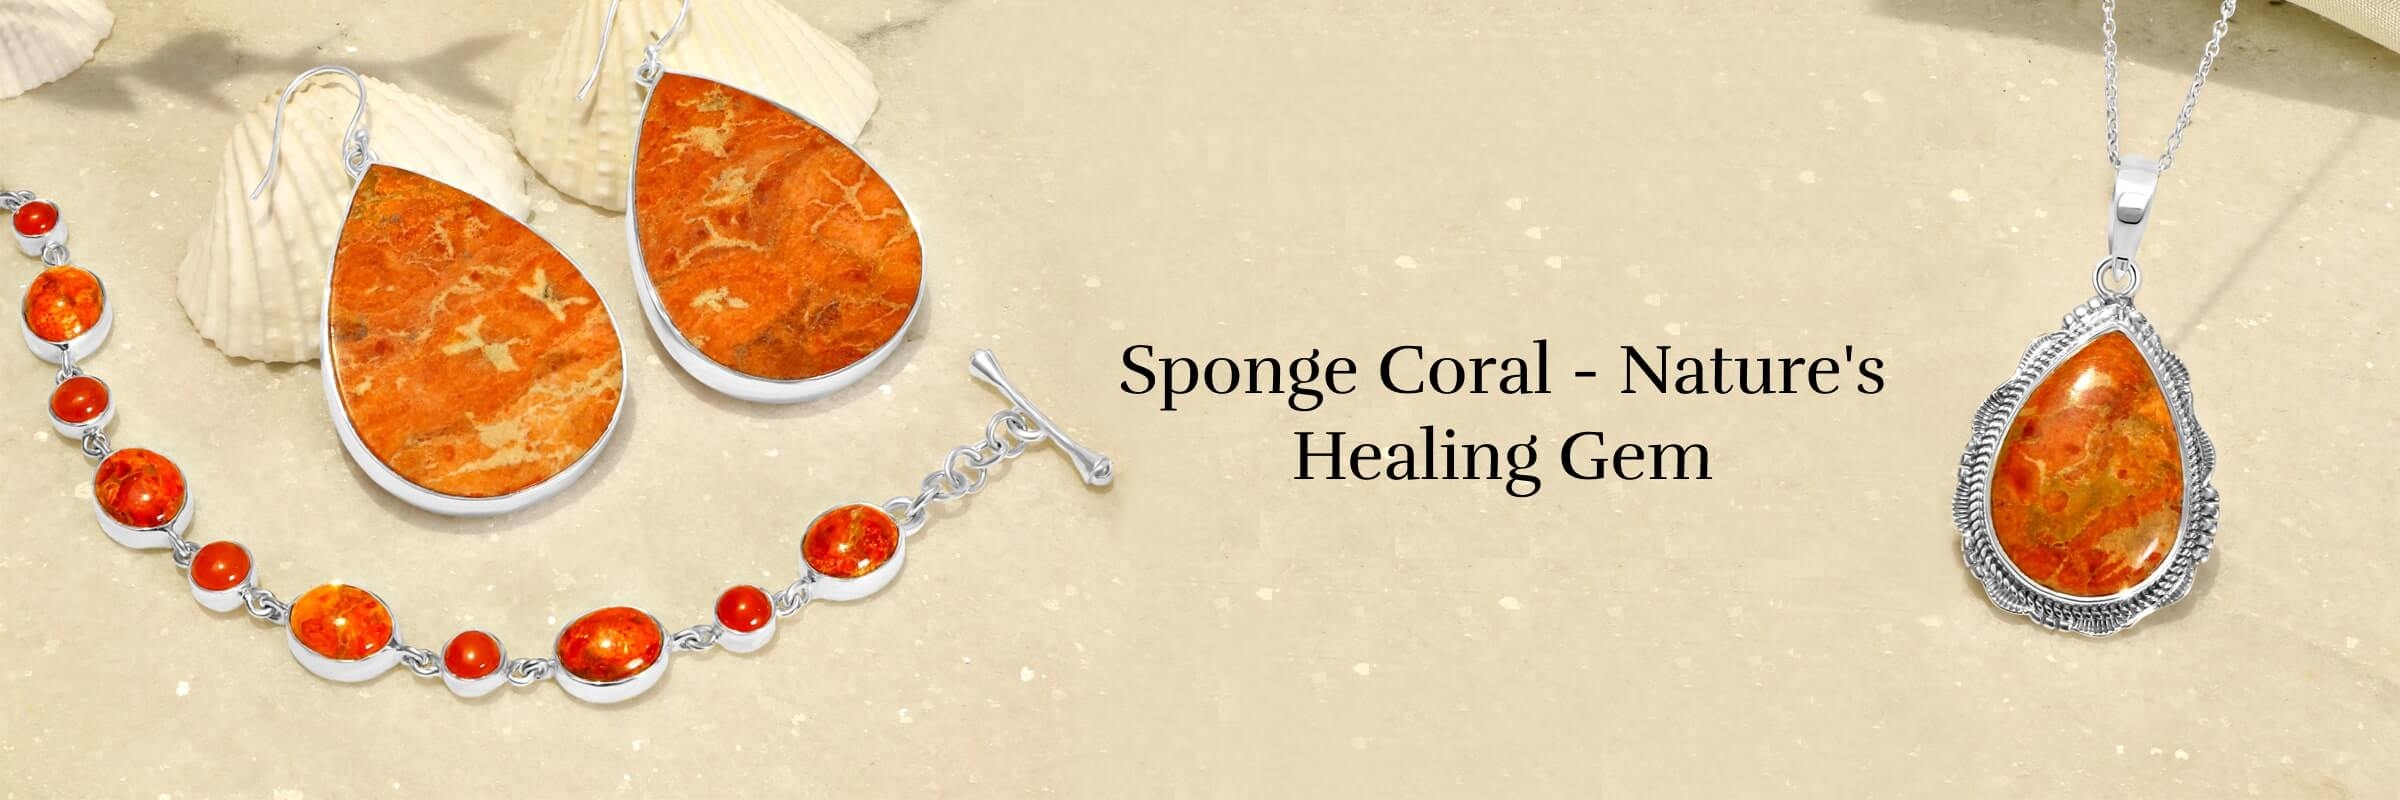 Healing properties of sponge coral Stone